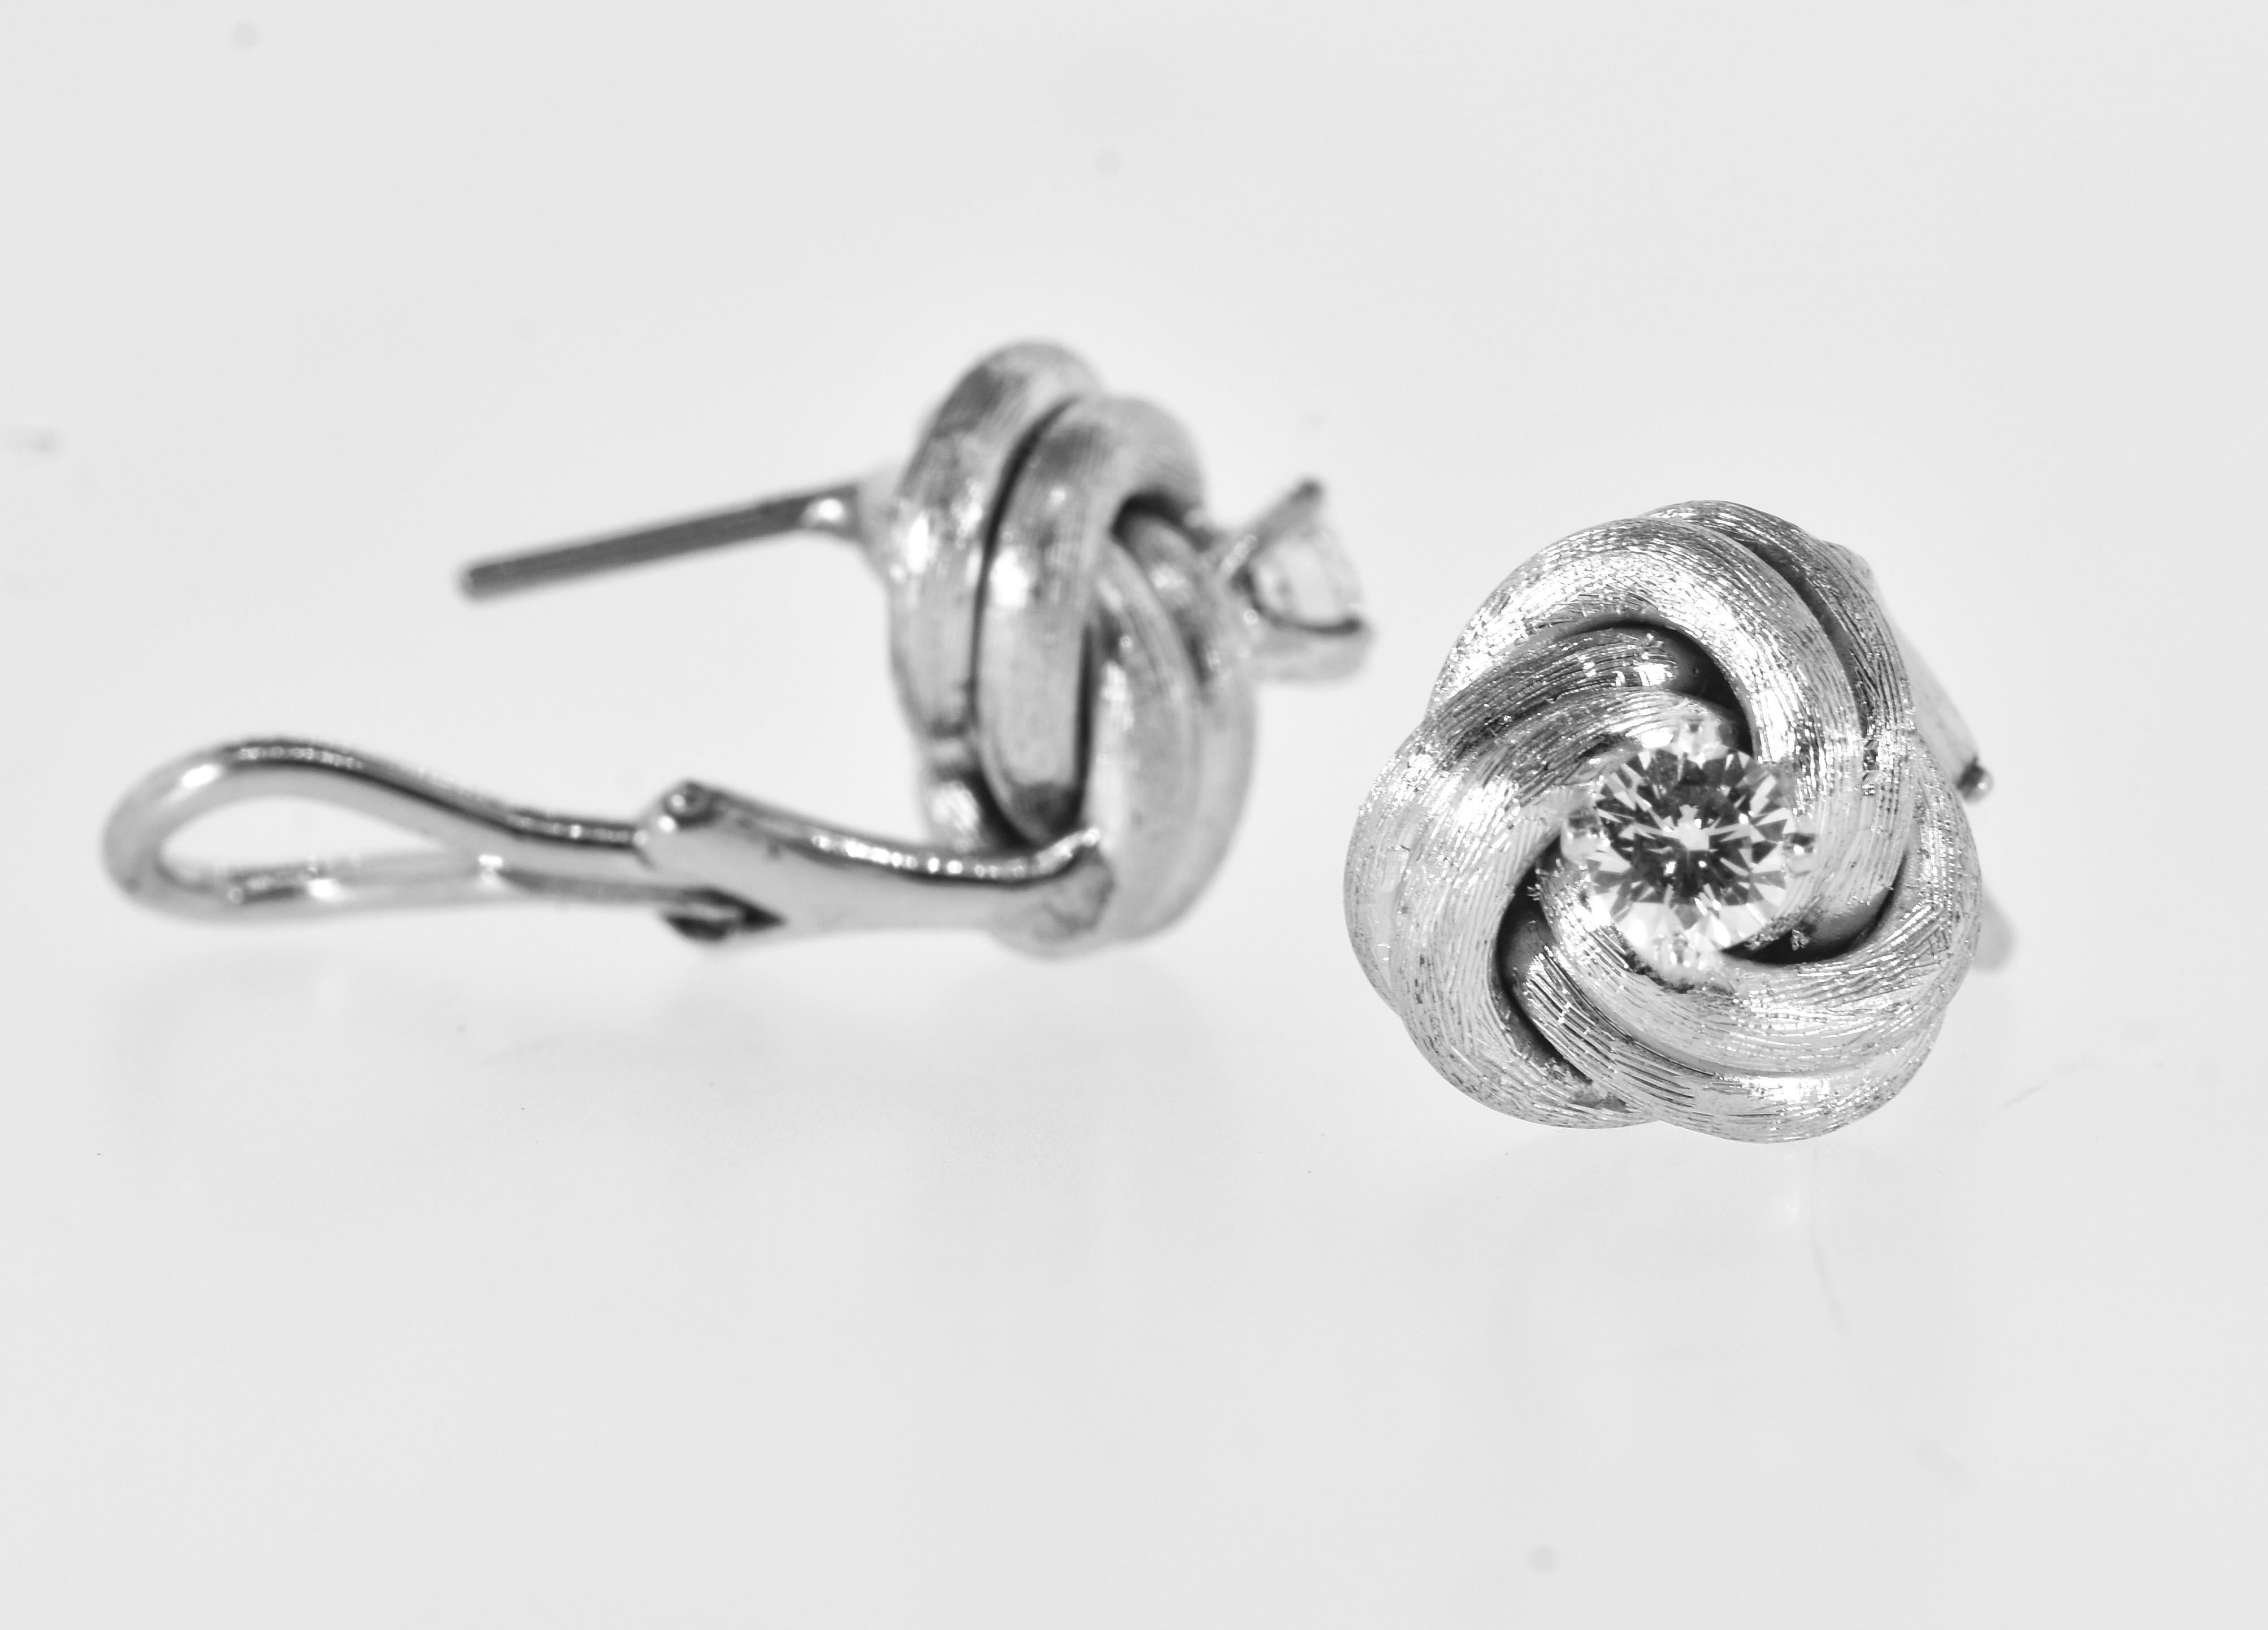 Brilliant Cut Diamond Ear Stud White Gold Medium Size Earrings in a Love Knot Motif. For Sale